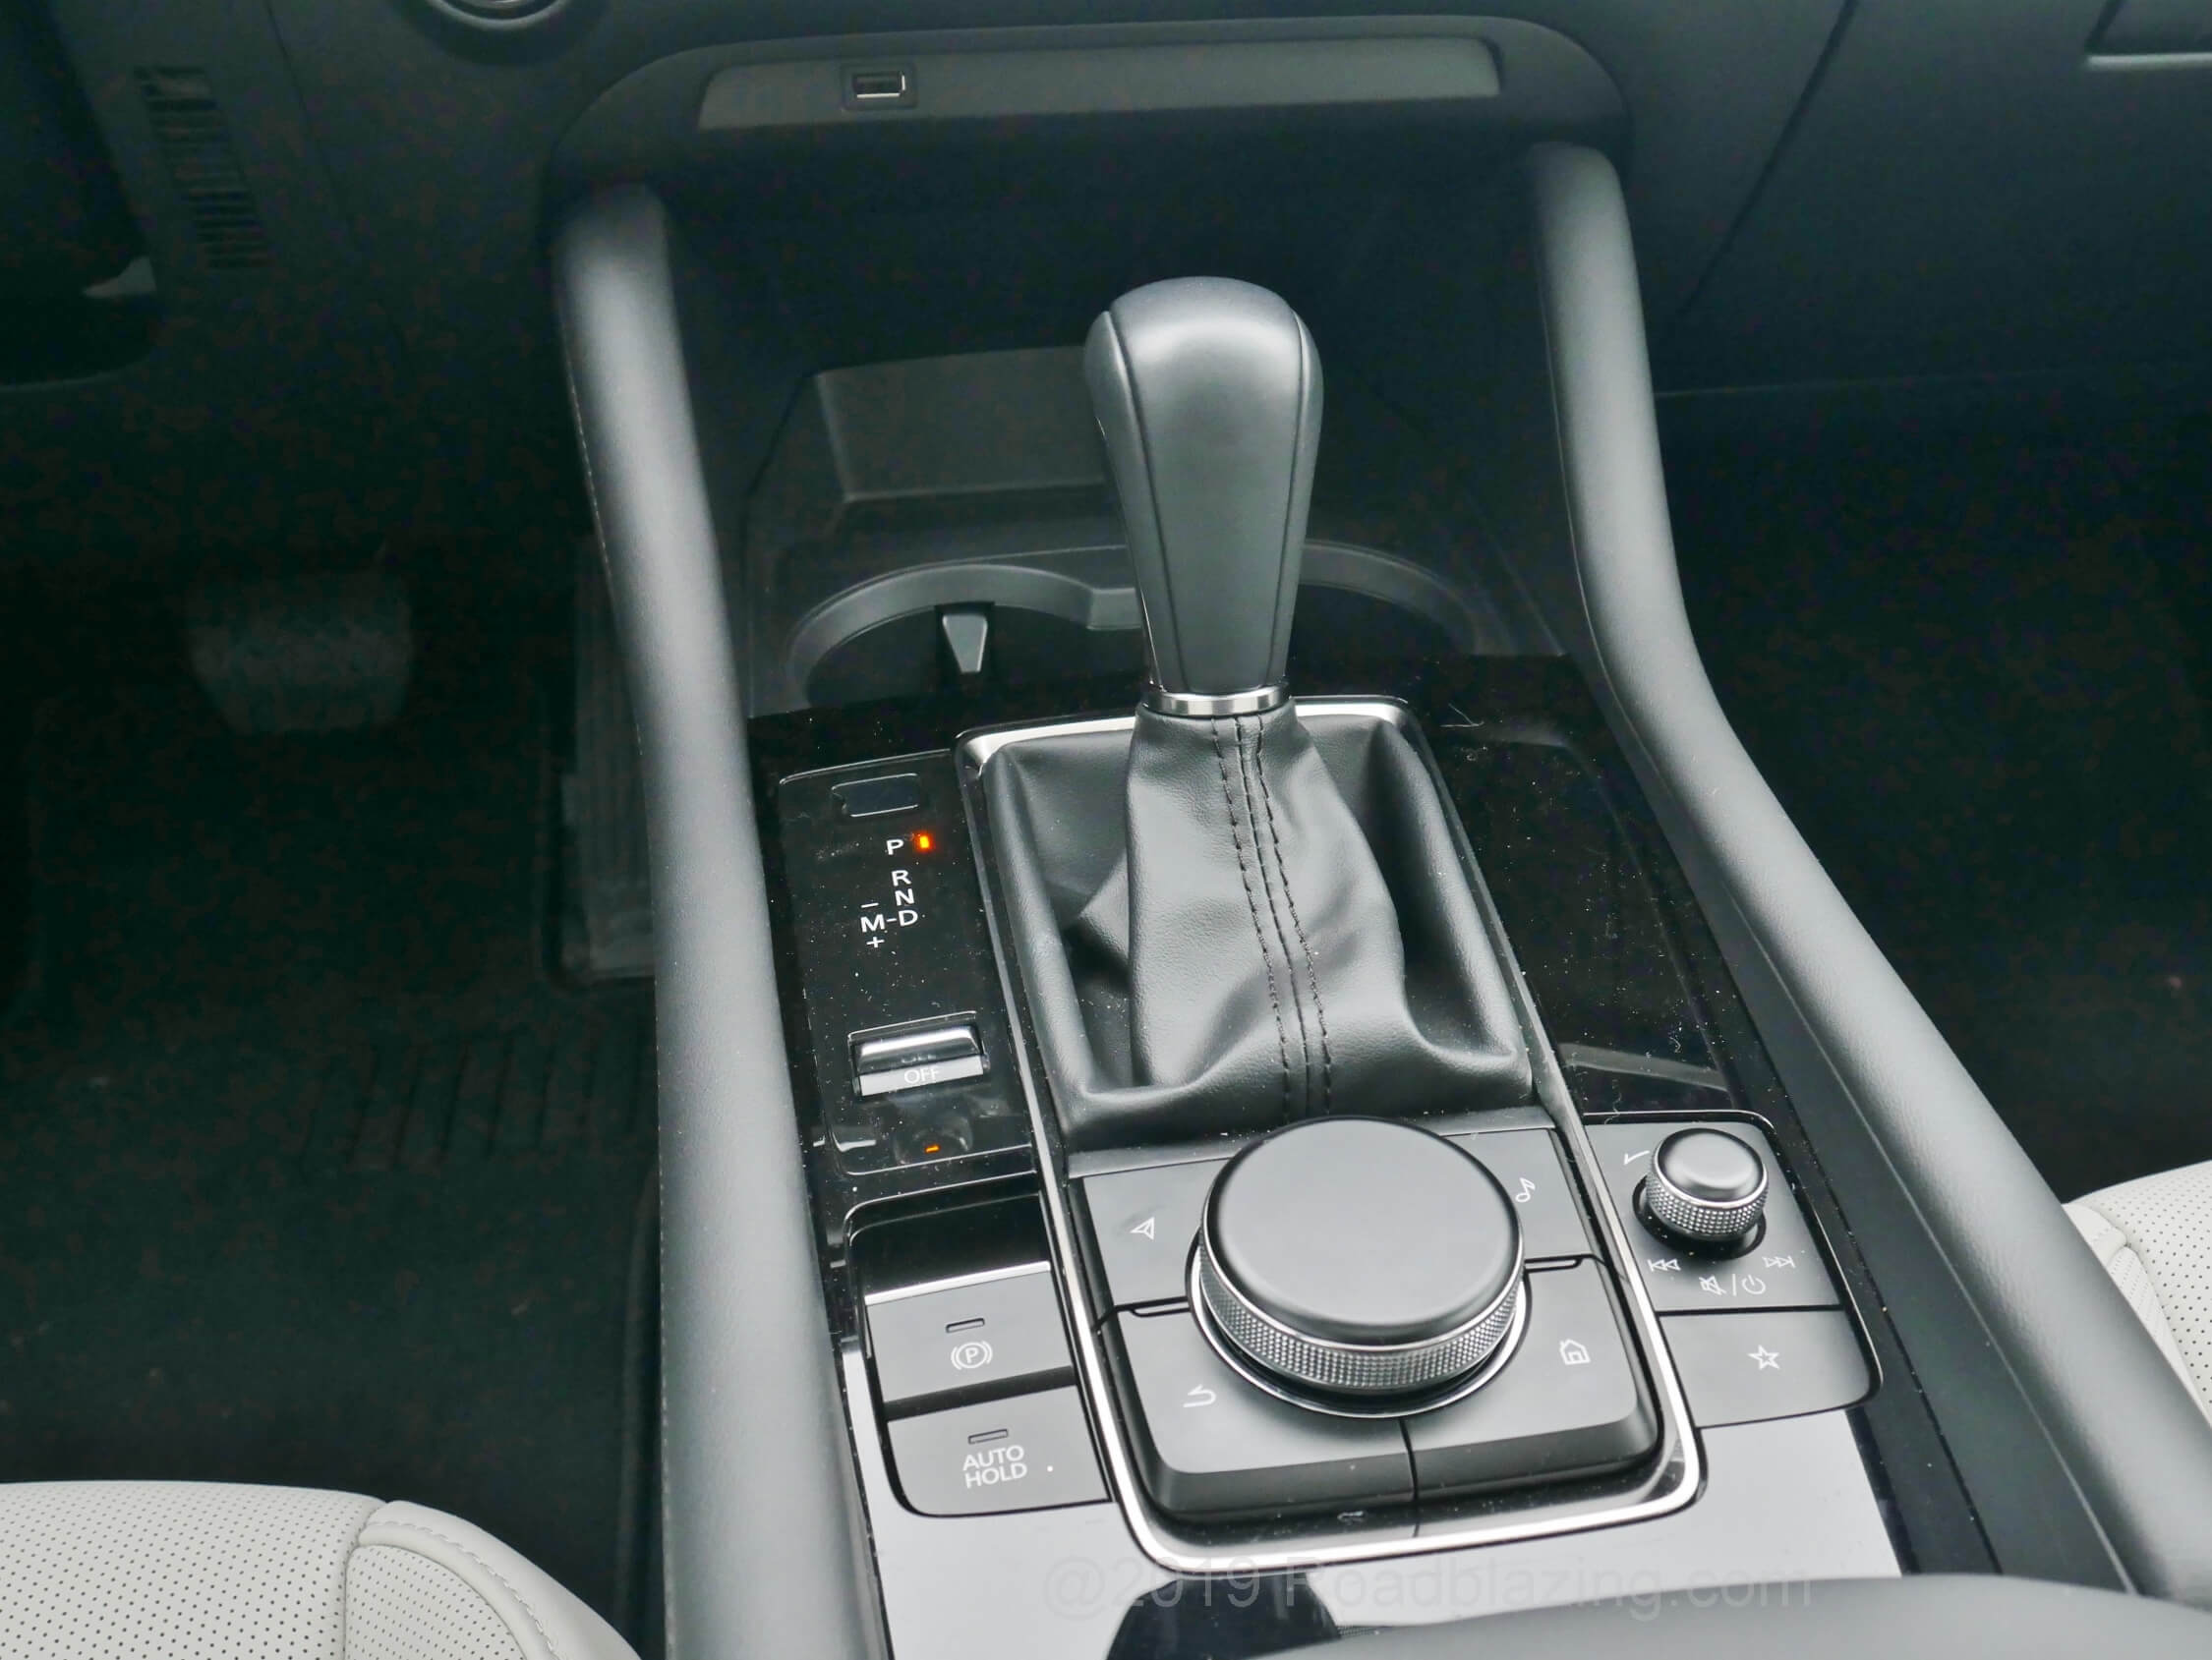 2021 Mazda 3 2.5 Turbo Hatchback: Revised remote media display precision twist, toggle Commander knob and updated adjacent audio volume knob with live / rewind toggle.